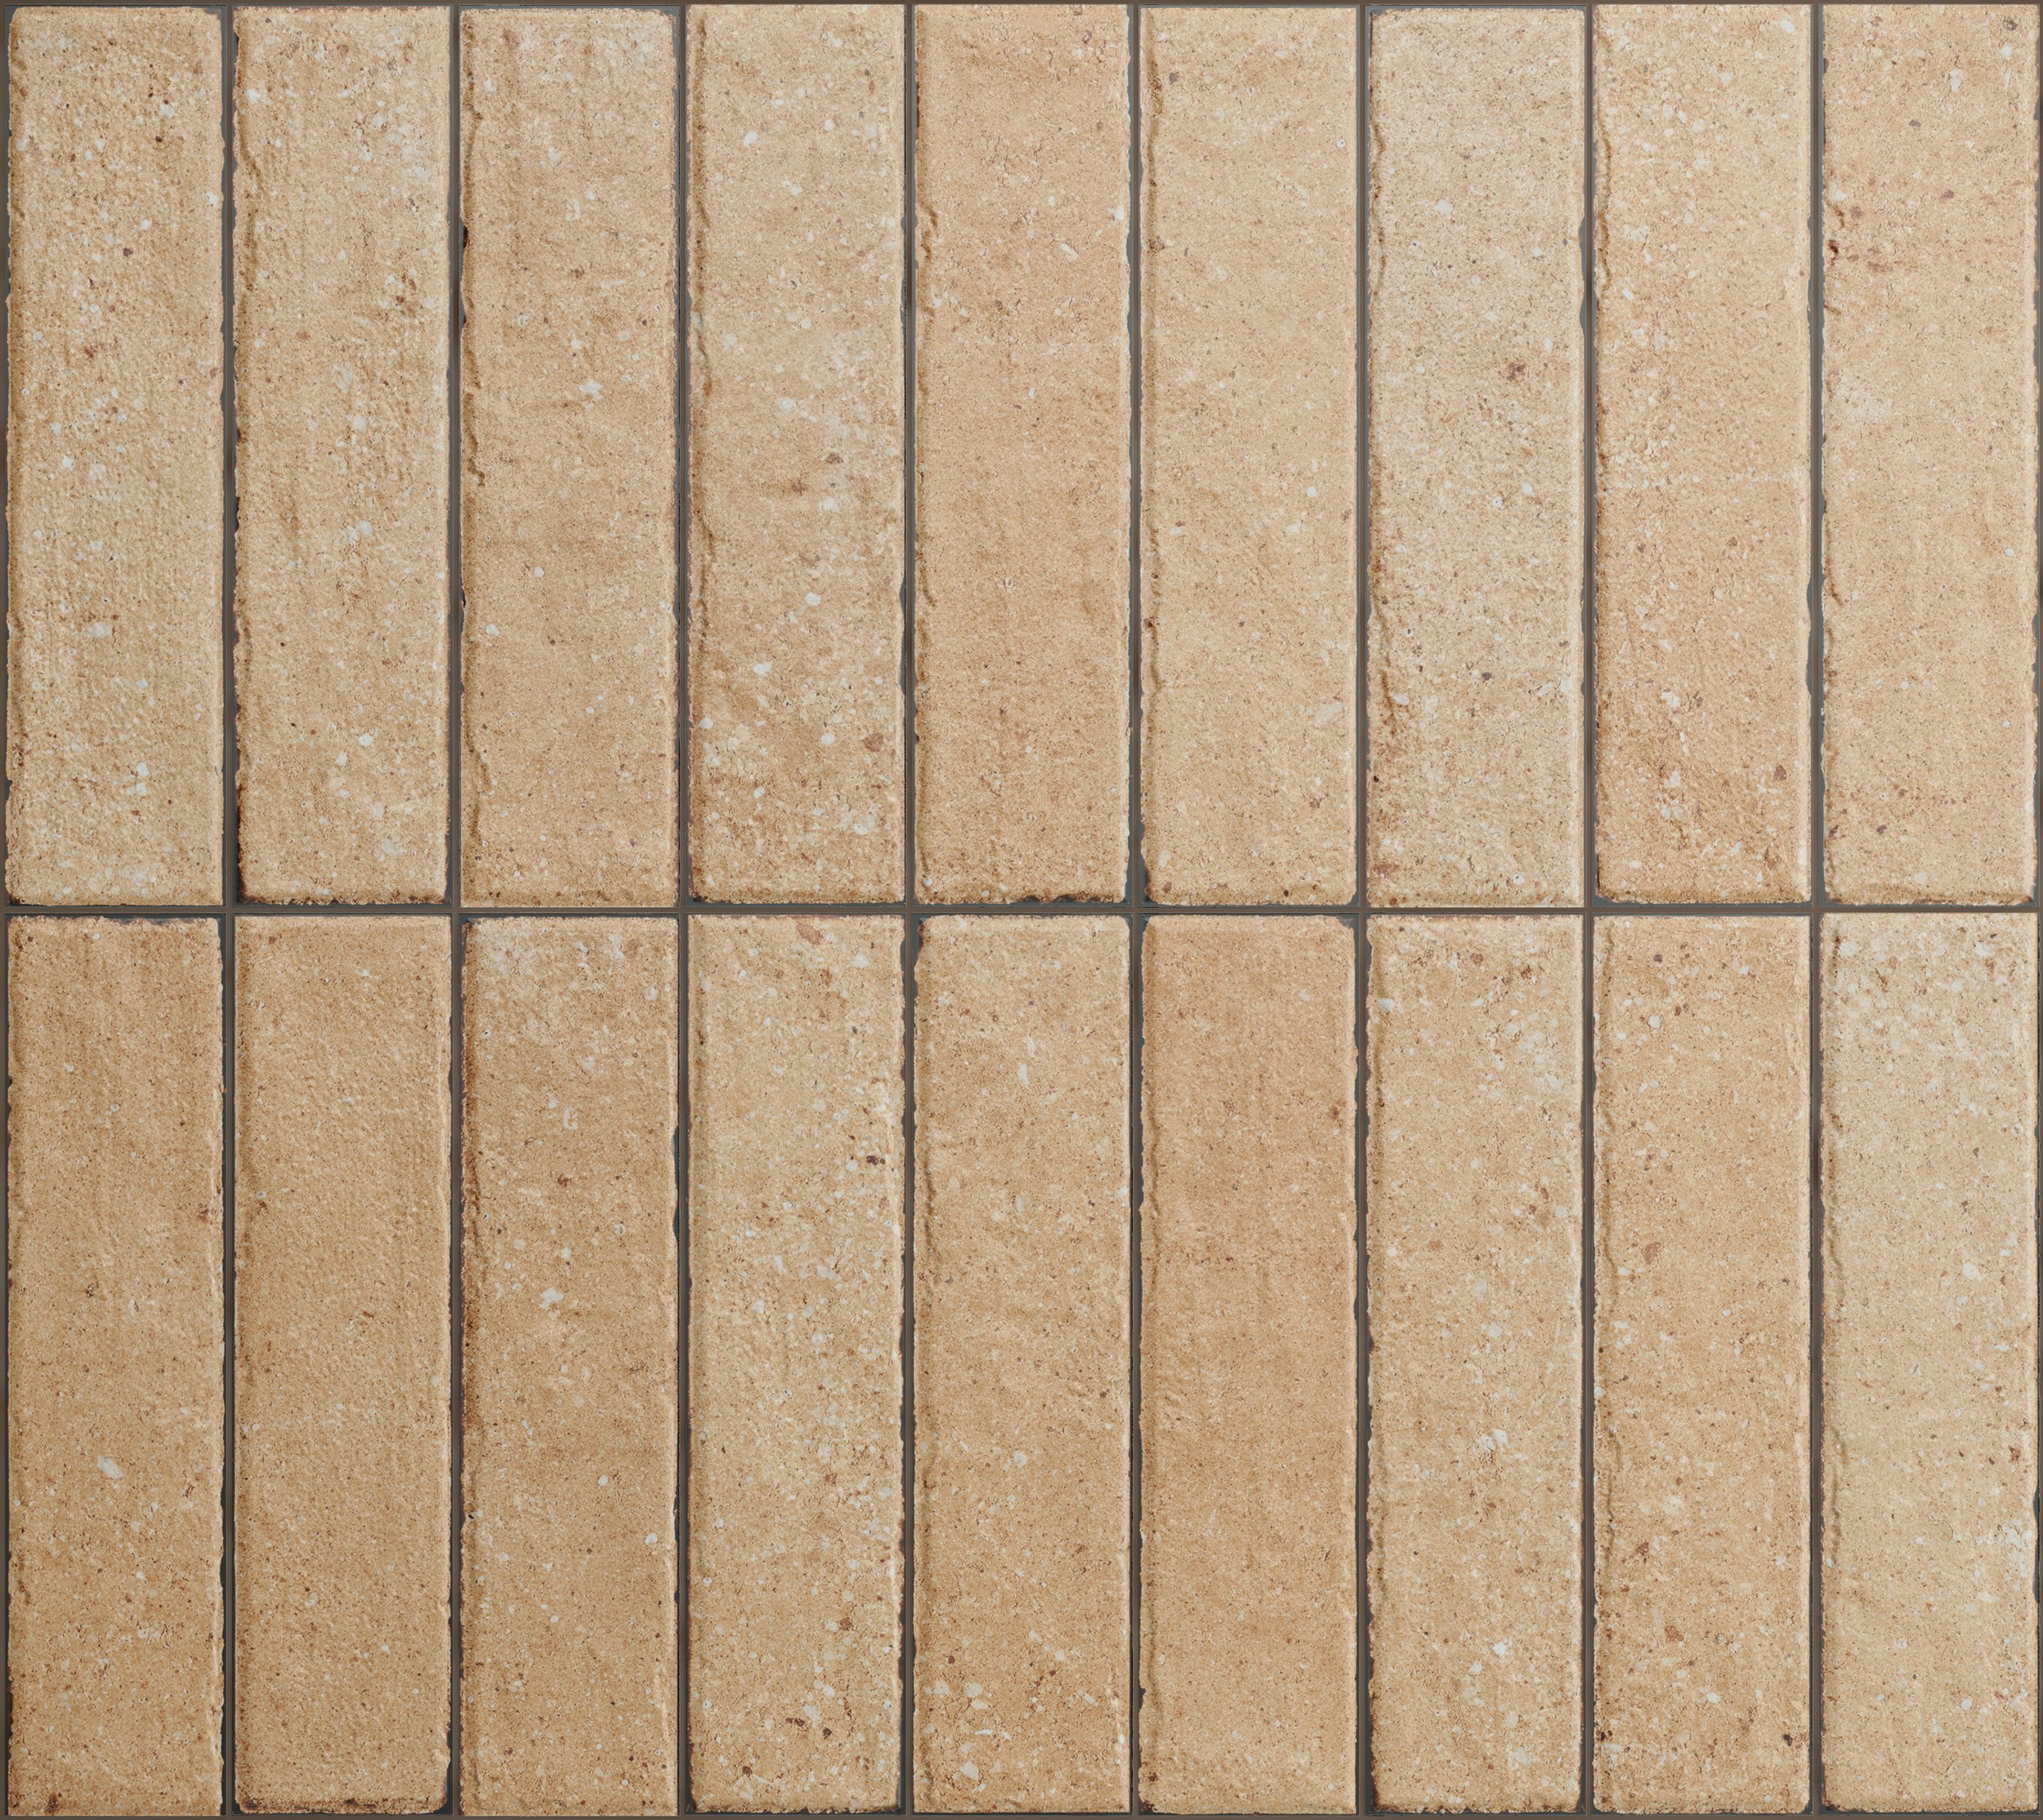 Fliese glasiert unregelmäßige Oberfläche "Tetris Block Sand" sandbeige matt 5x20cm